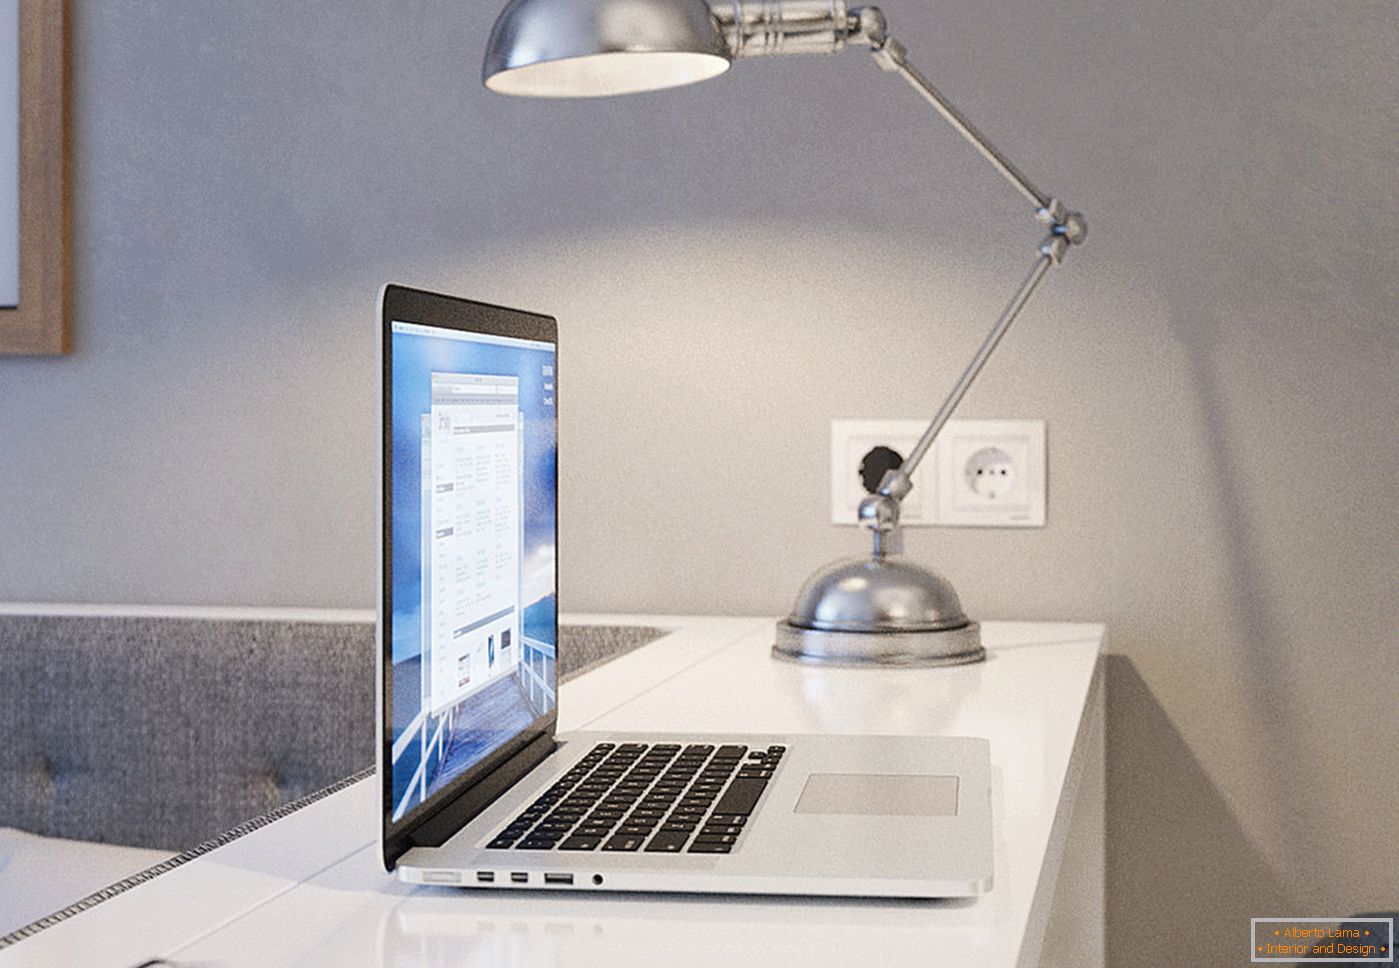 Table lamp for working area illumination